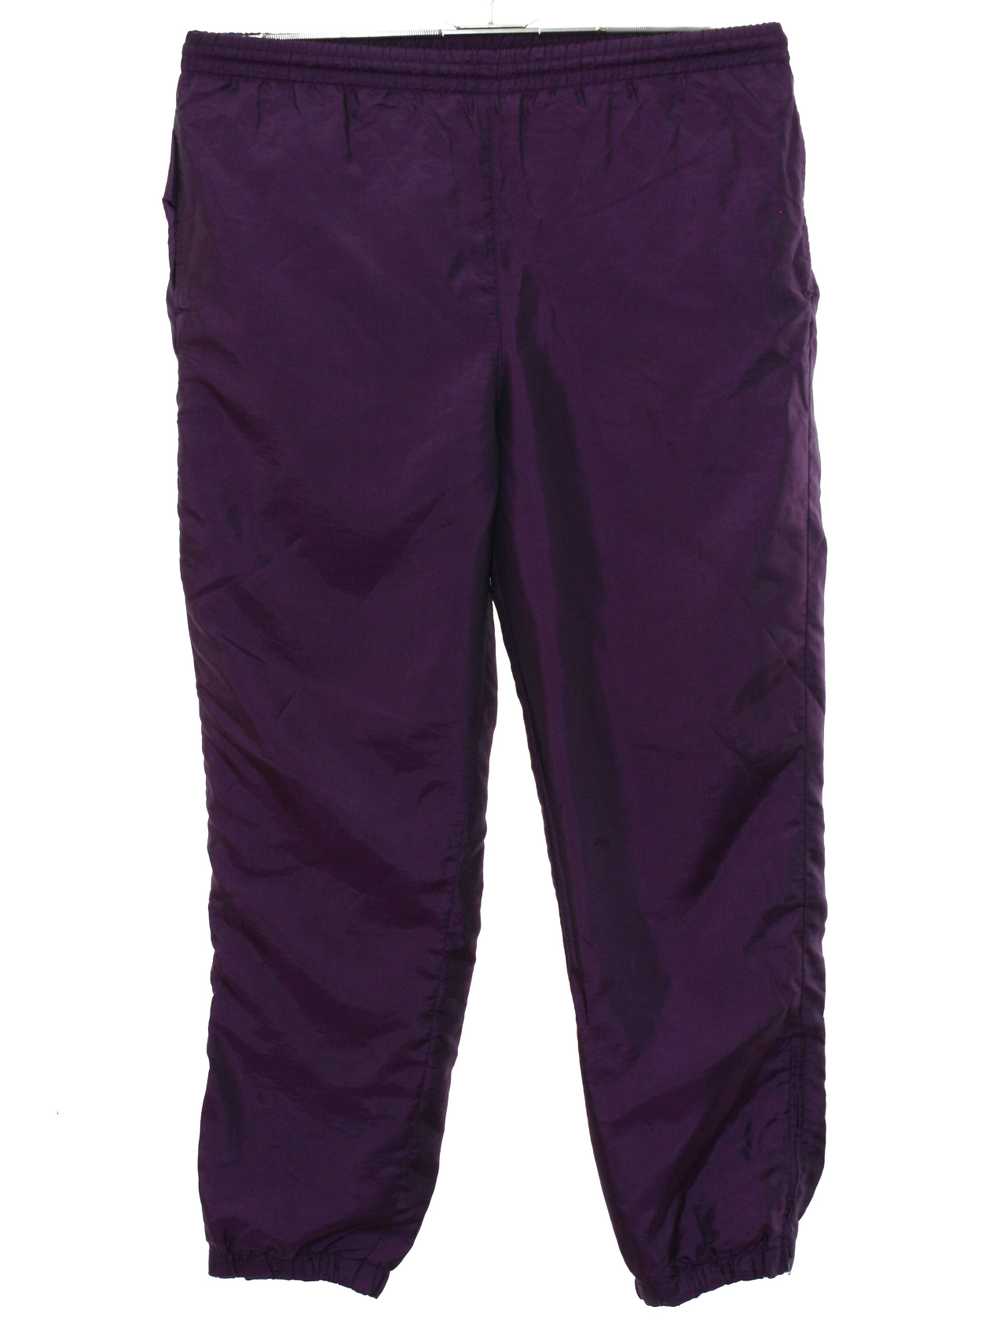 1990's Womens Nylon Baggy Track Pants - image 1